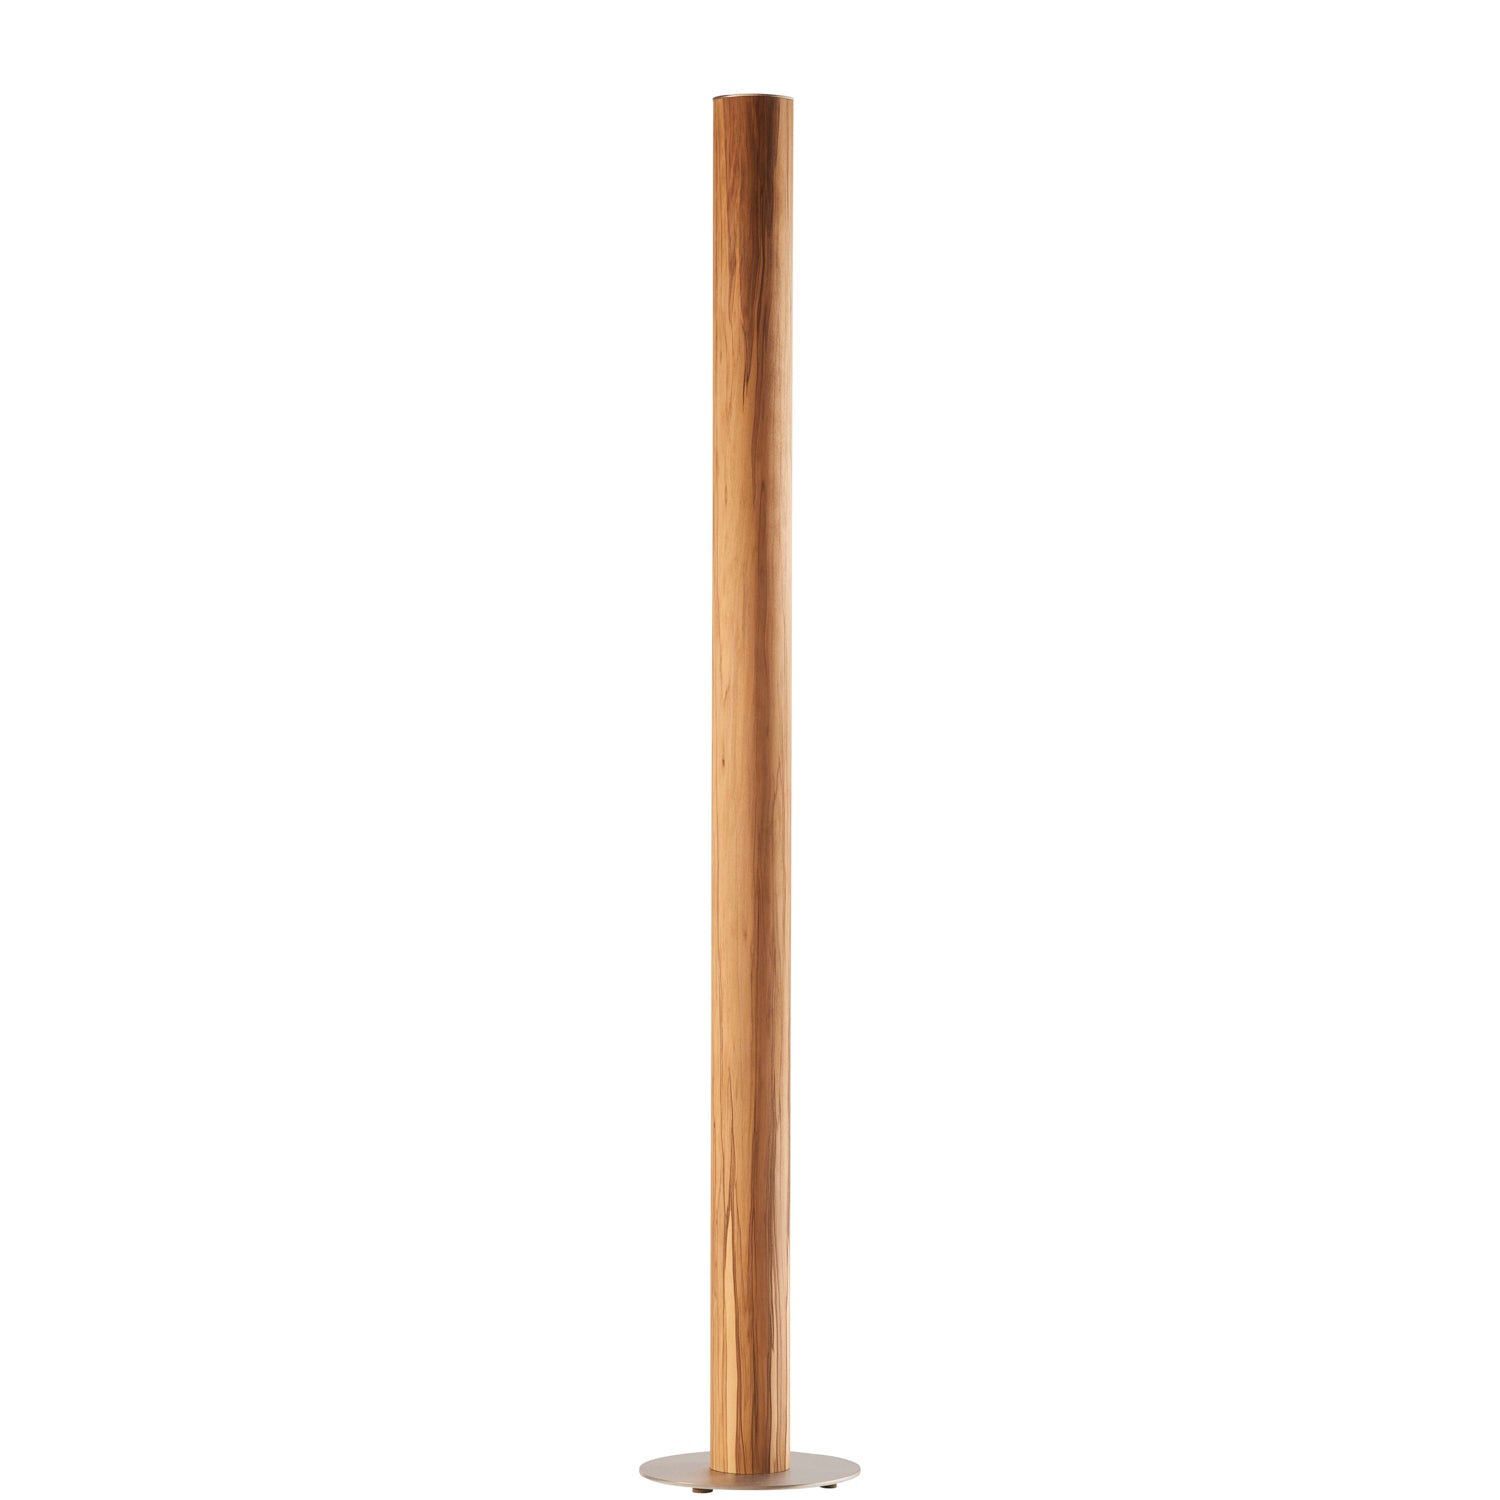 Gracia floor lamp | Wood Leuchtnatur veneer walnut lamp –